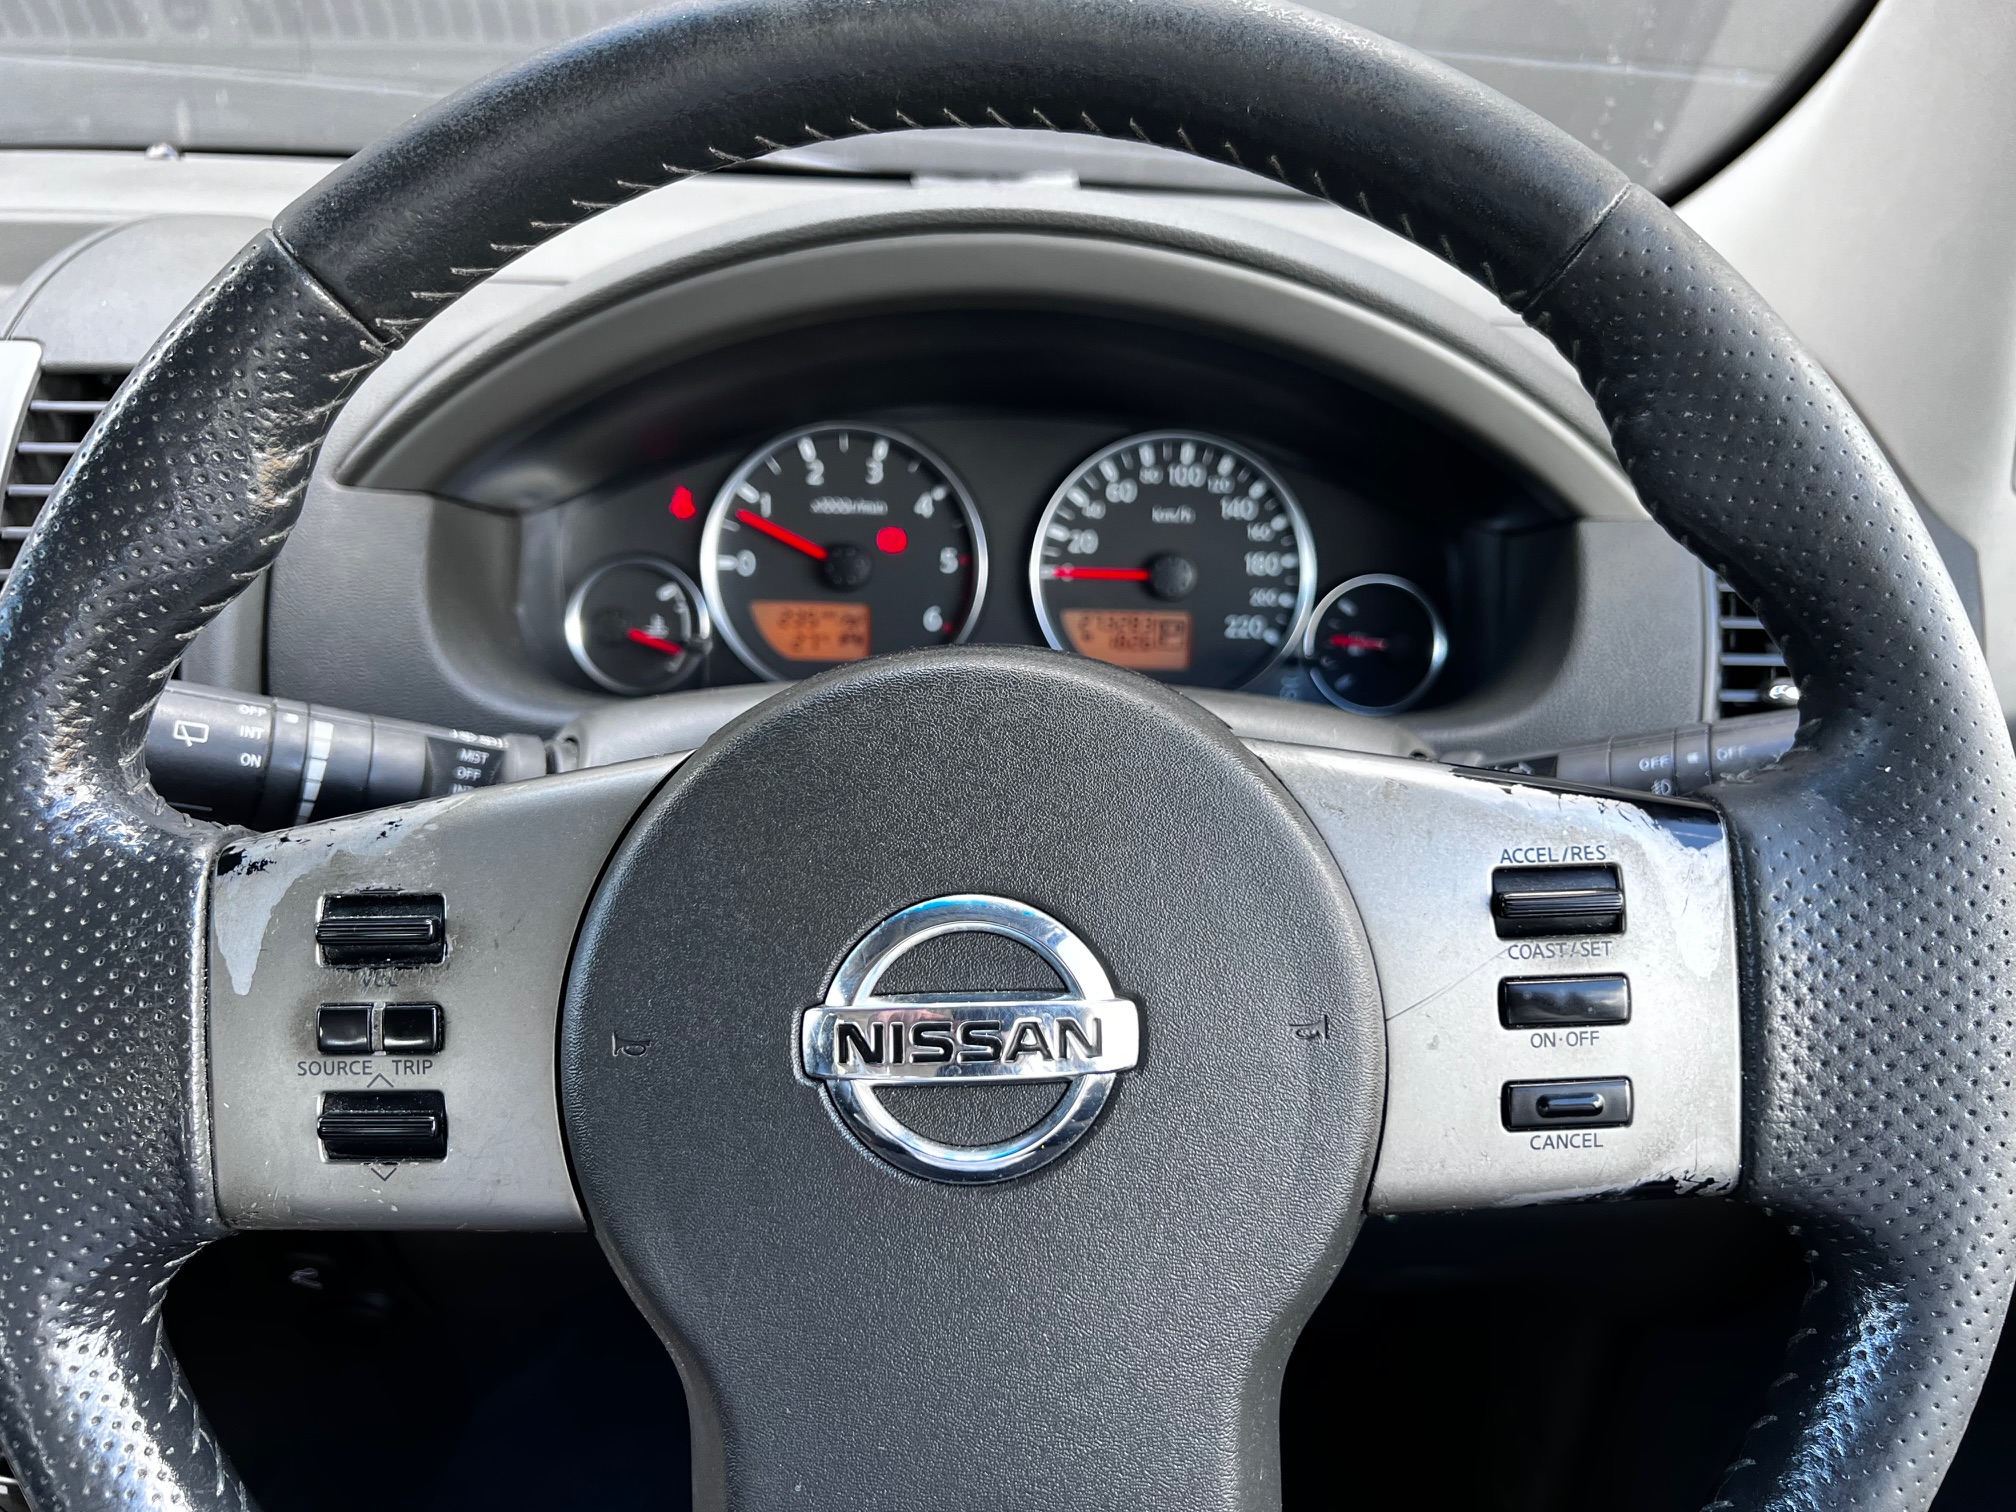 Nissan Pathfinder 2009 Image 18